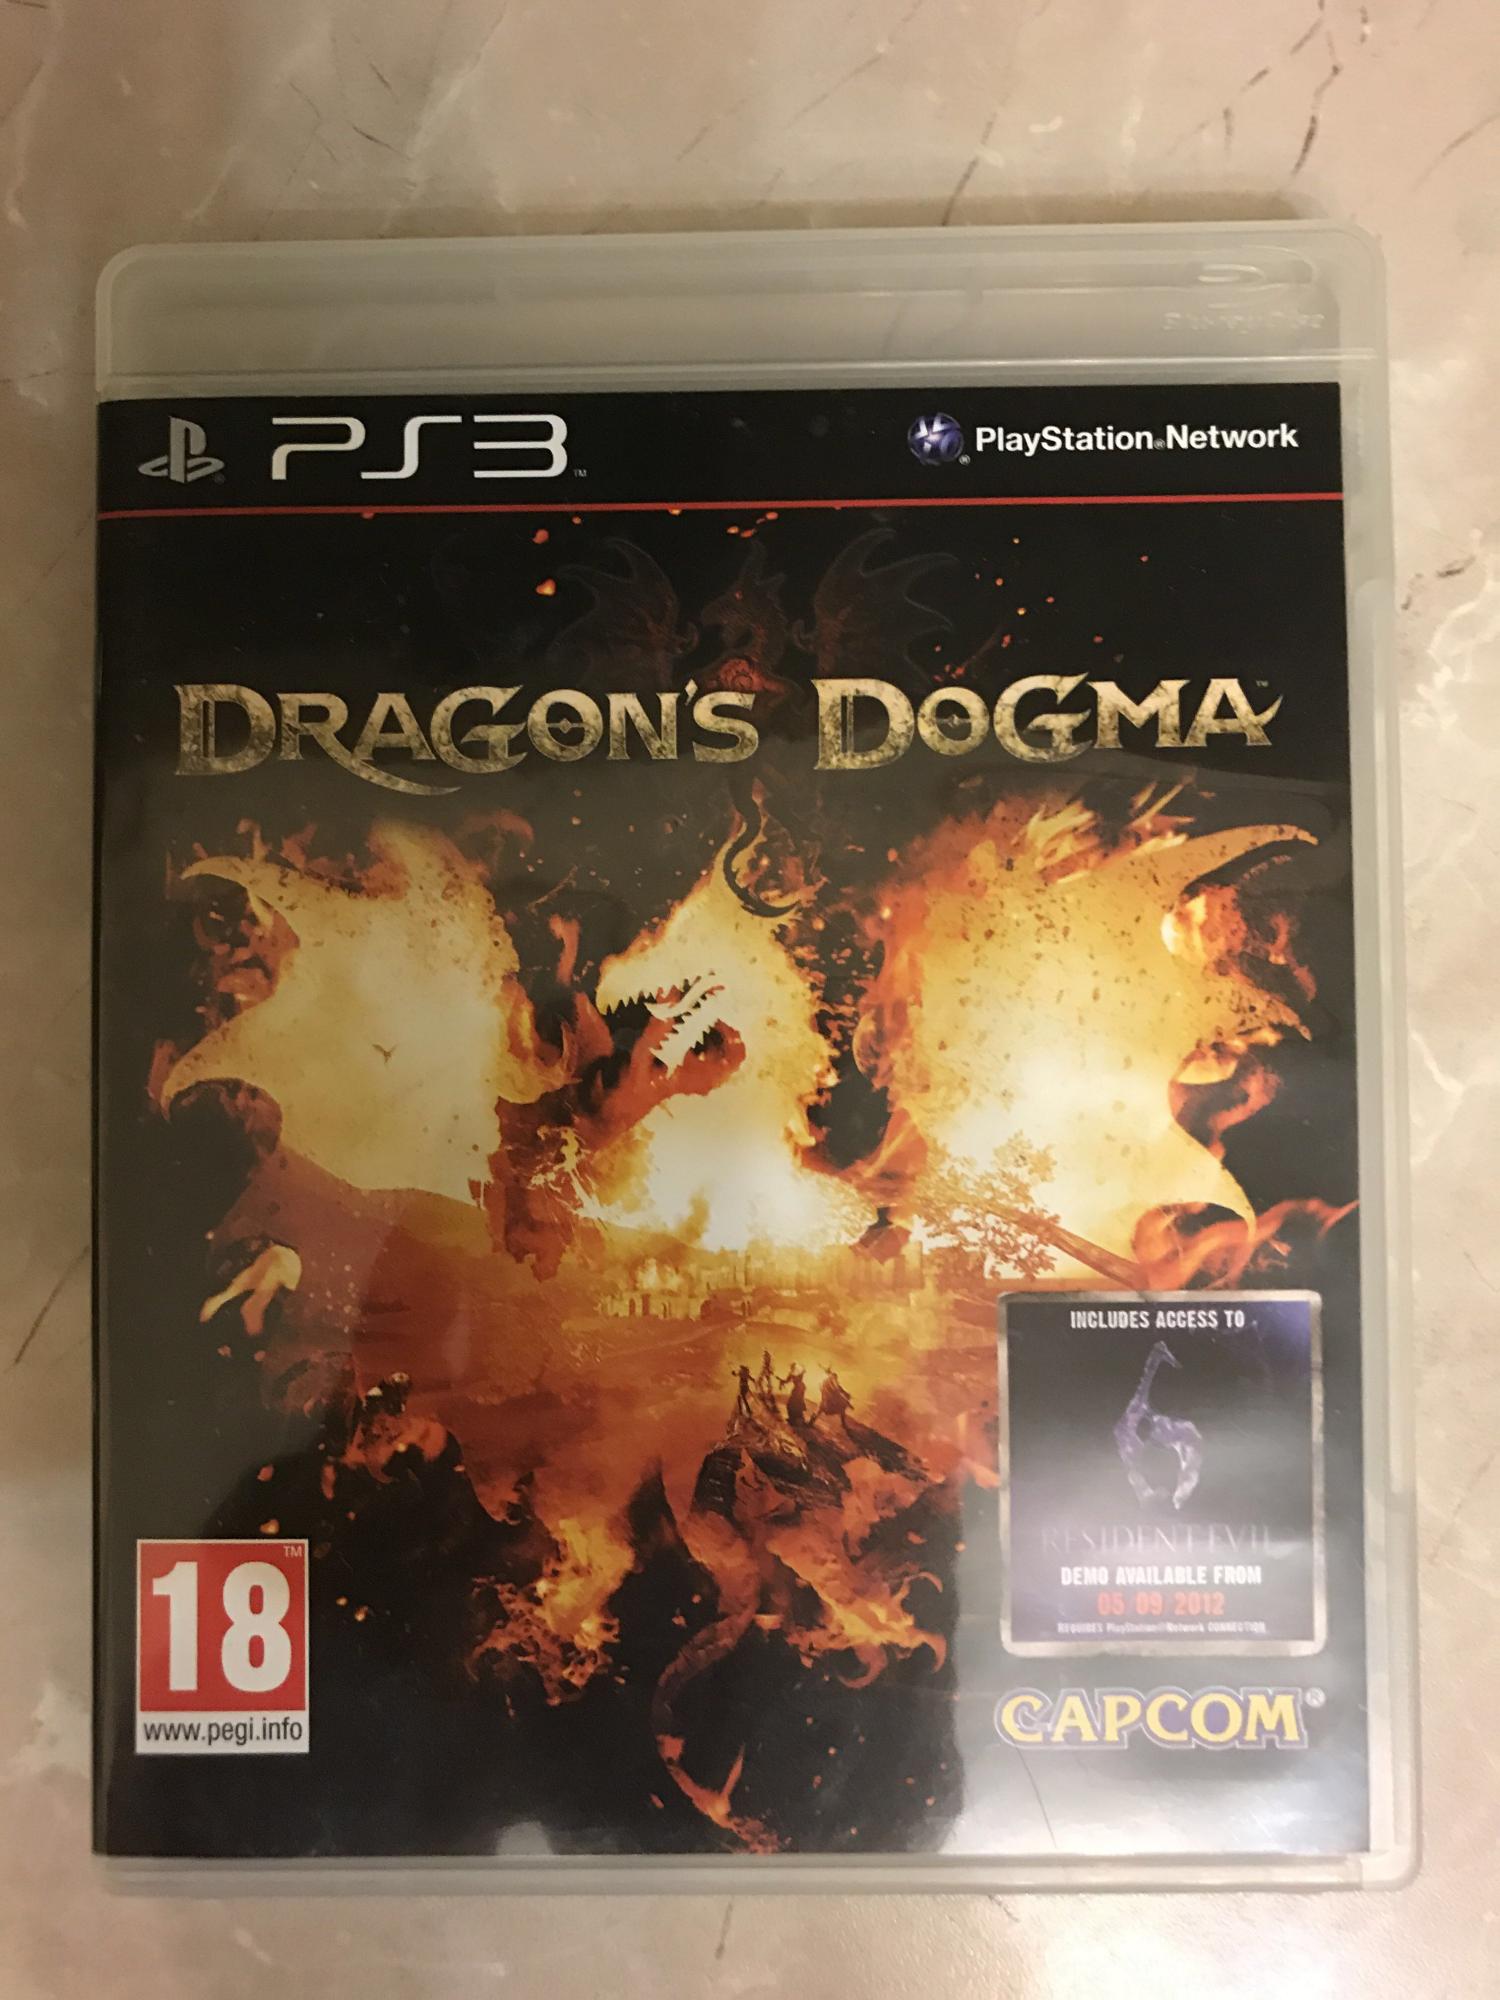 Драгон догма 2 цена. Dragons Dogma ps3 диск. Dragon's Dogma 2 Deluxe Edition Xbox. Драгон с Догма пс4. Dragon’s Dogma II игра обложка.